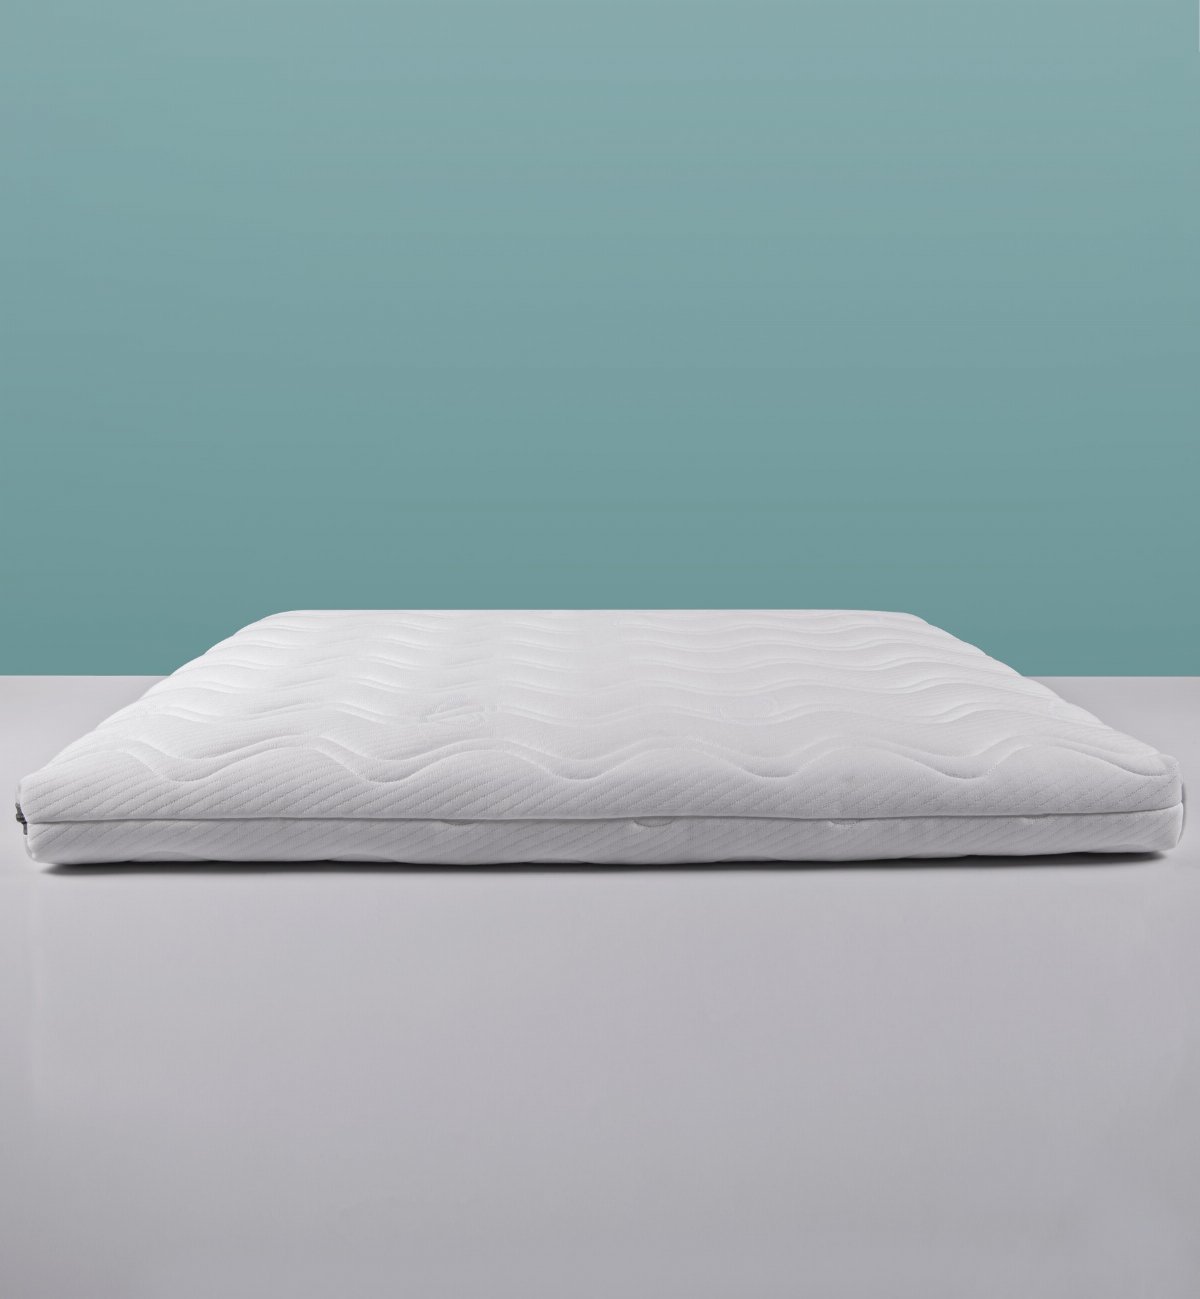 COCOLATEX® 95x75x5 cm organic park mattress with removable cover Kadolis